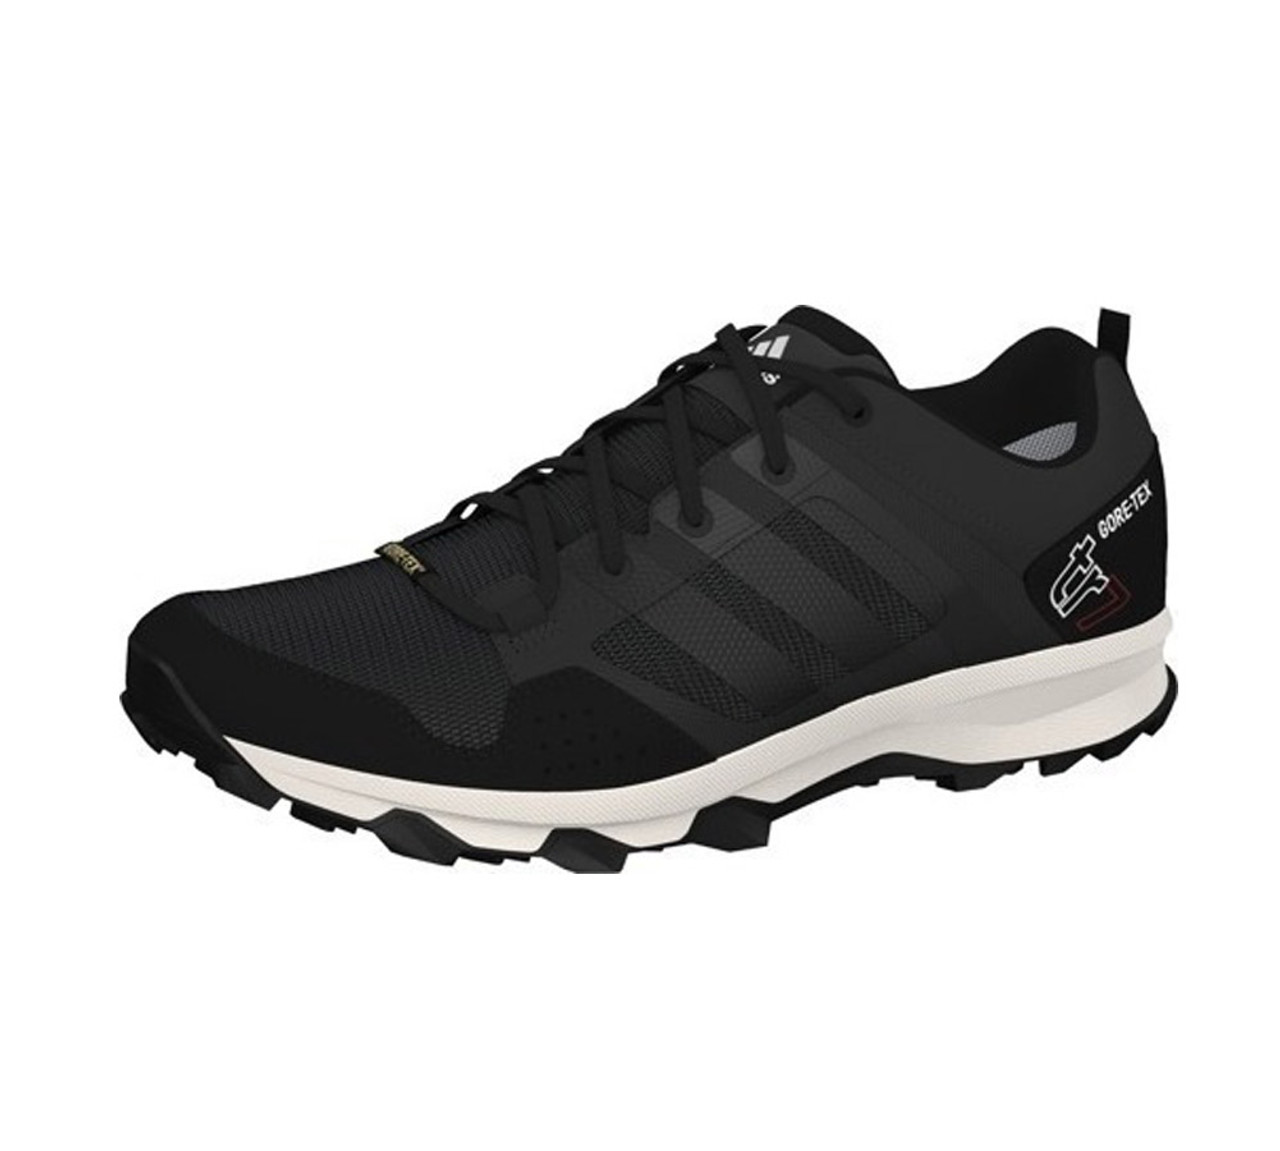 Adidas 7 TR GTX Trail Runner - Black | Discount Adidas Men's Athletic & More Shoolu.com | Shoolu.com